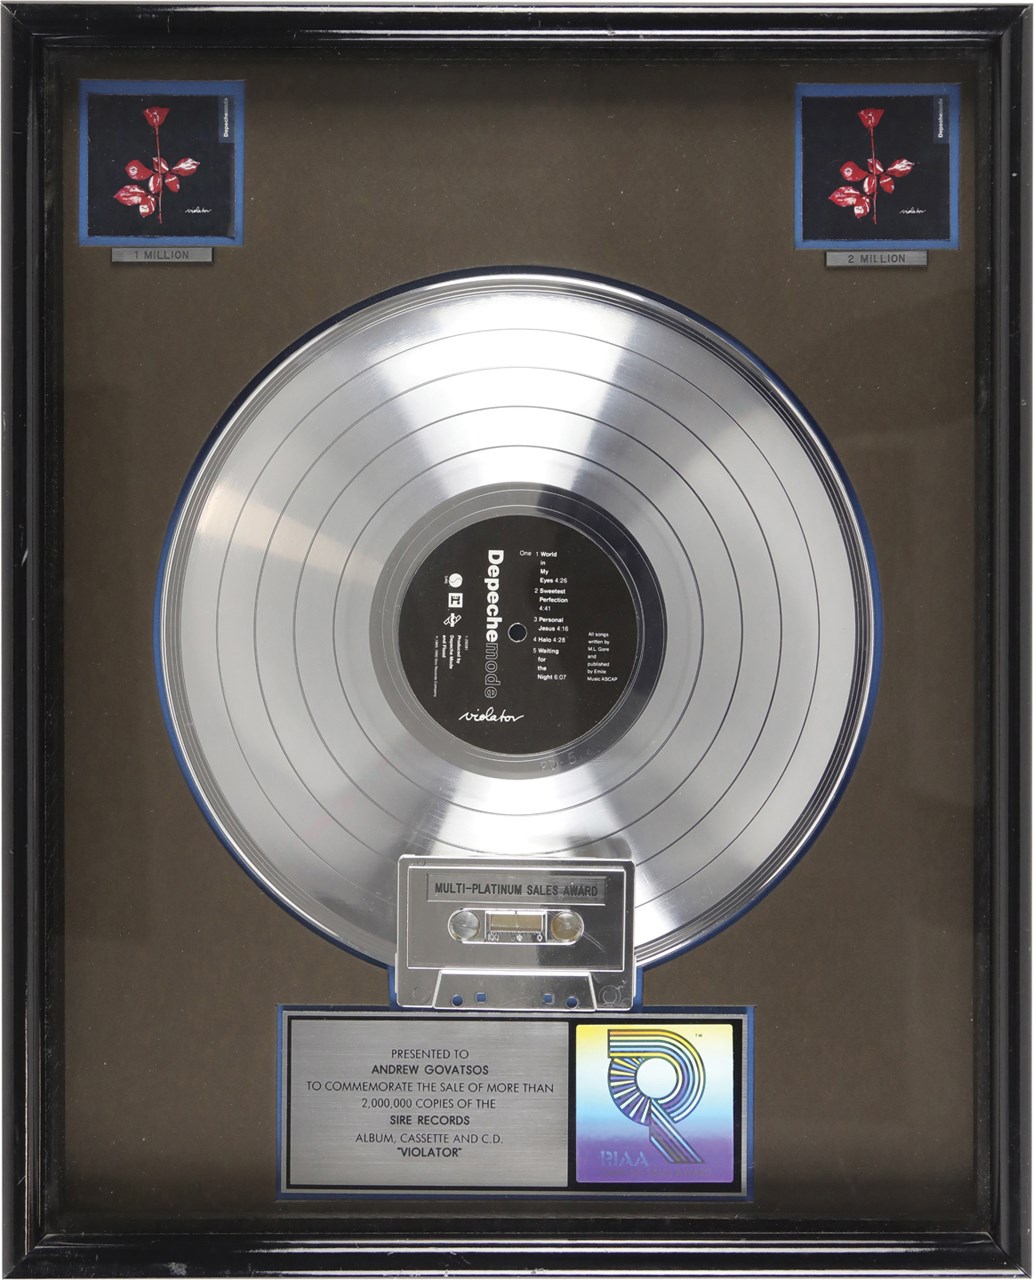 Rock And Pop Culture - Depeche Mode "Violator" Double Platinum Record Sales Award